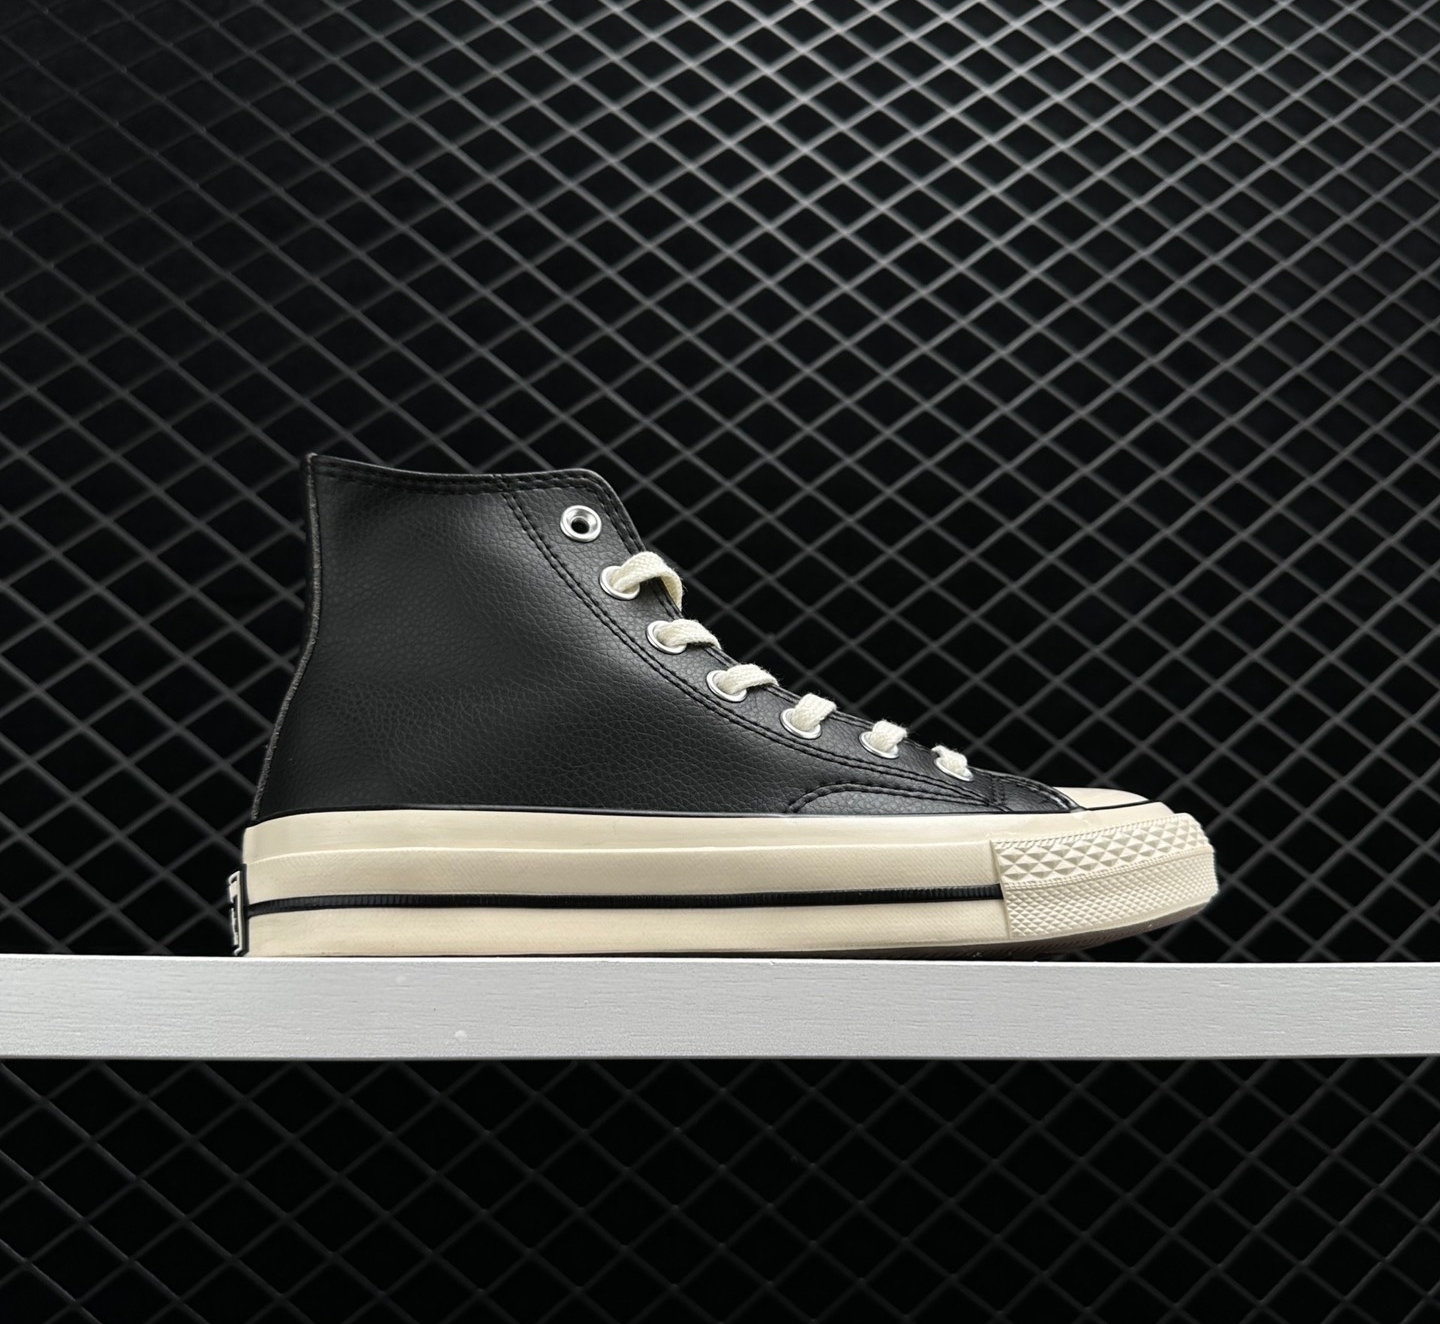 Converse Chuck 70 High Black White - Premium Classics for Everyday Style